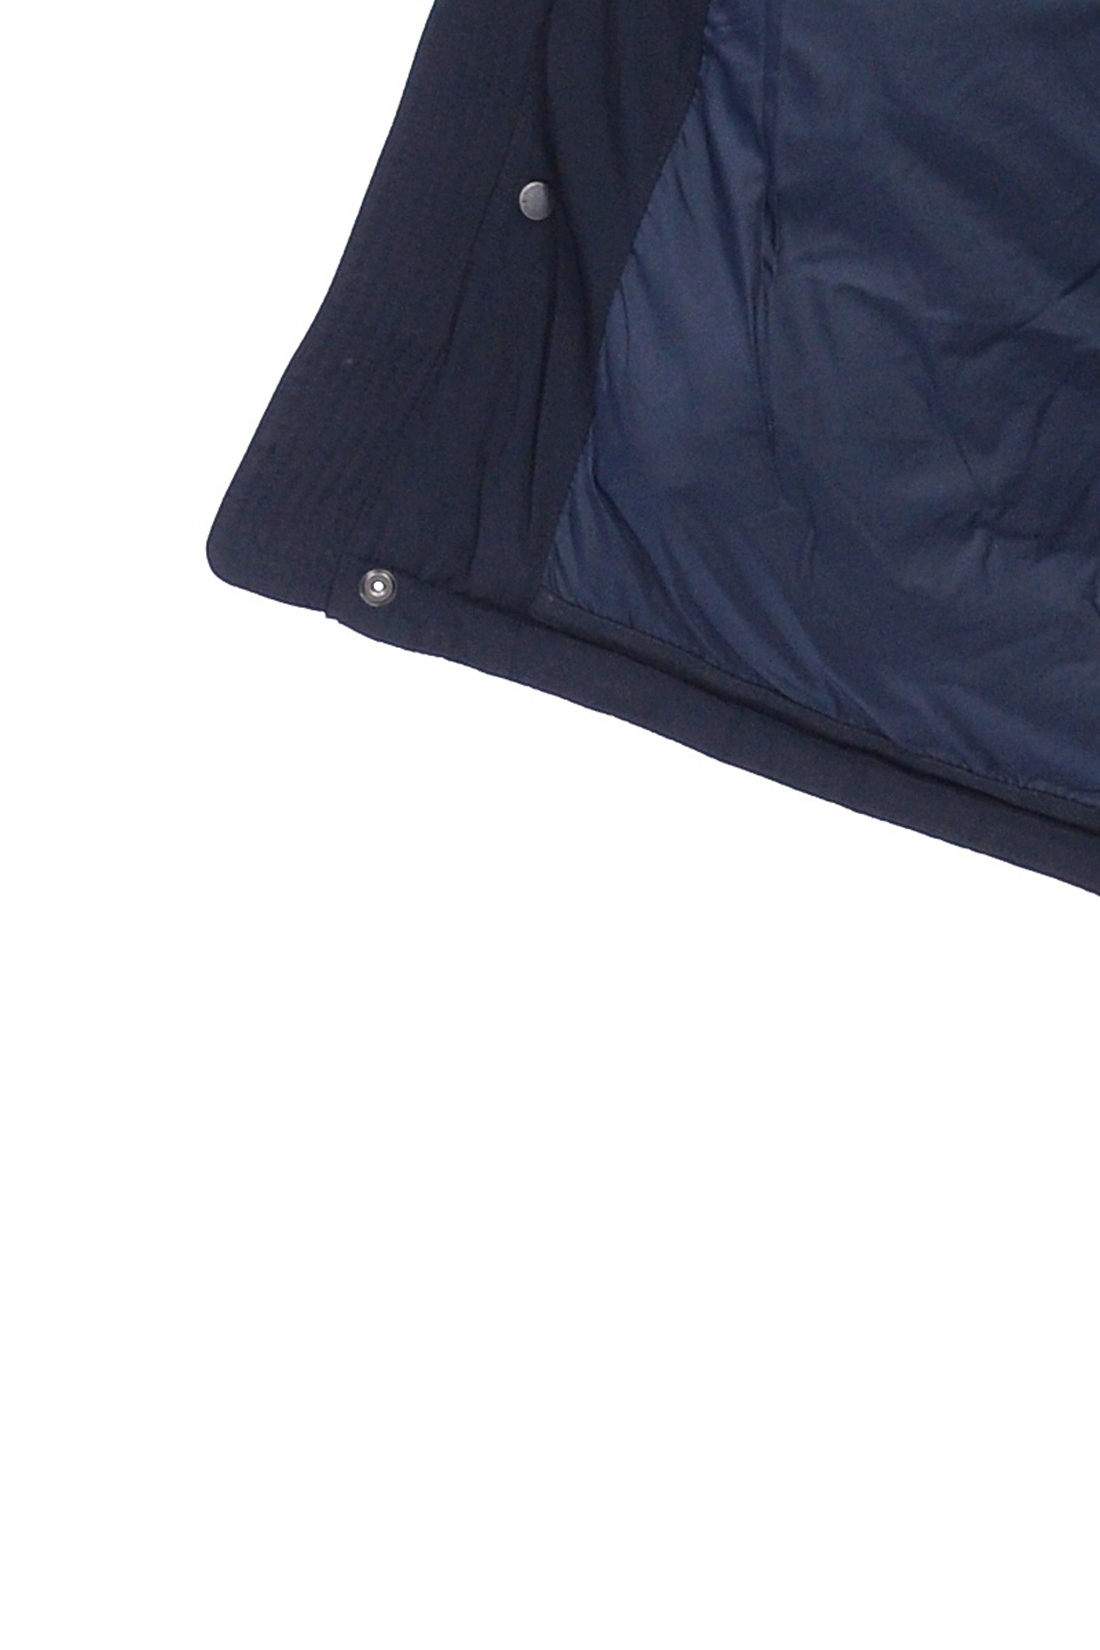 Пуховик-парка с карманами (арт. baon B508532), размер XL, цвет синий Пуховик-парка с карманами (арт. baon B508532) - фото 4